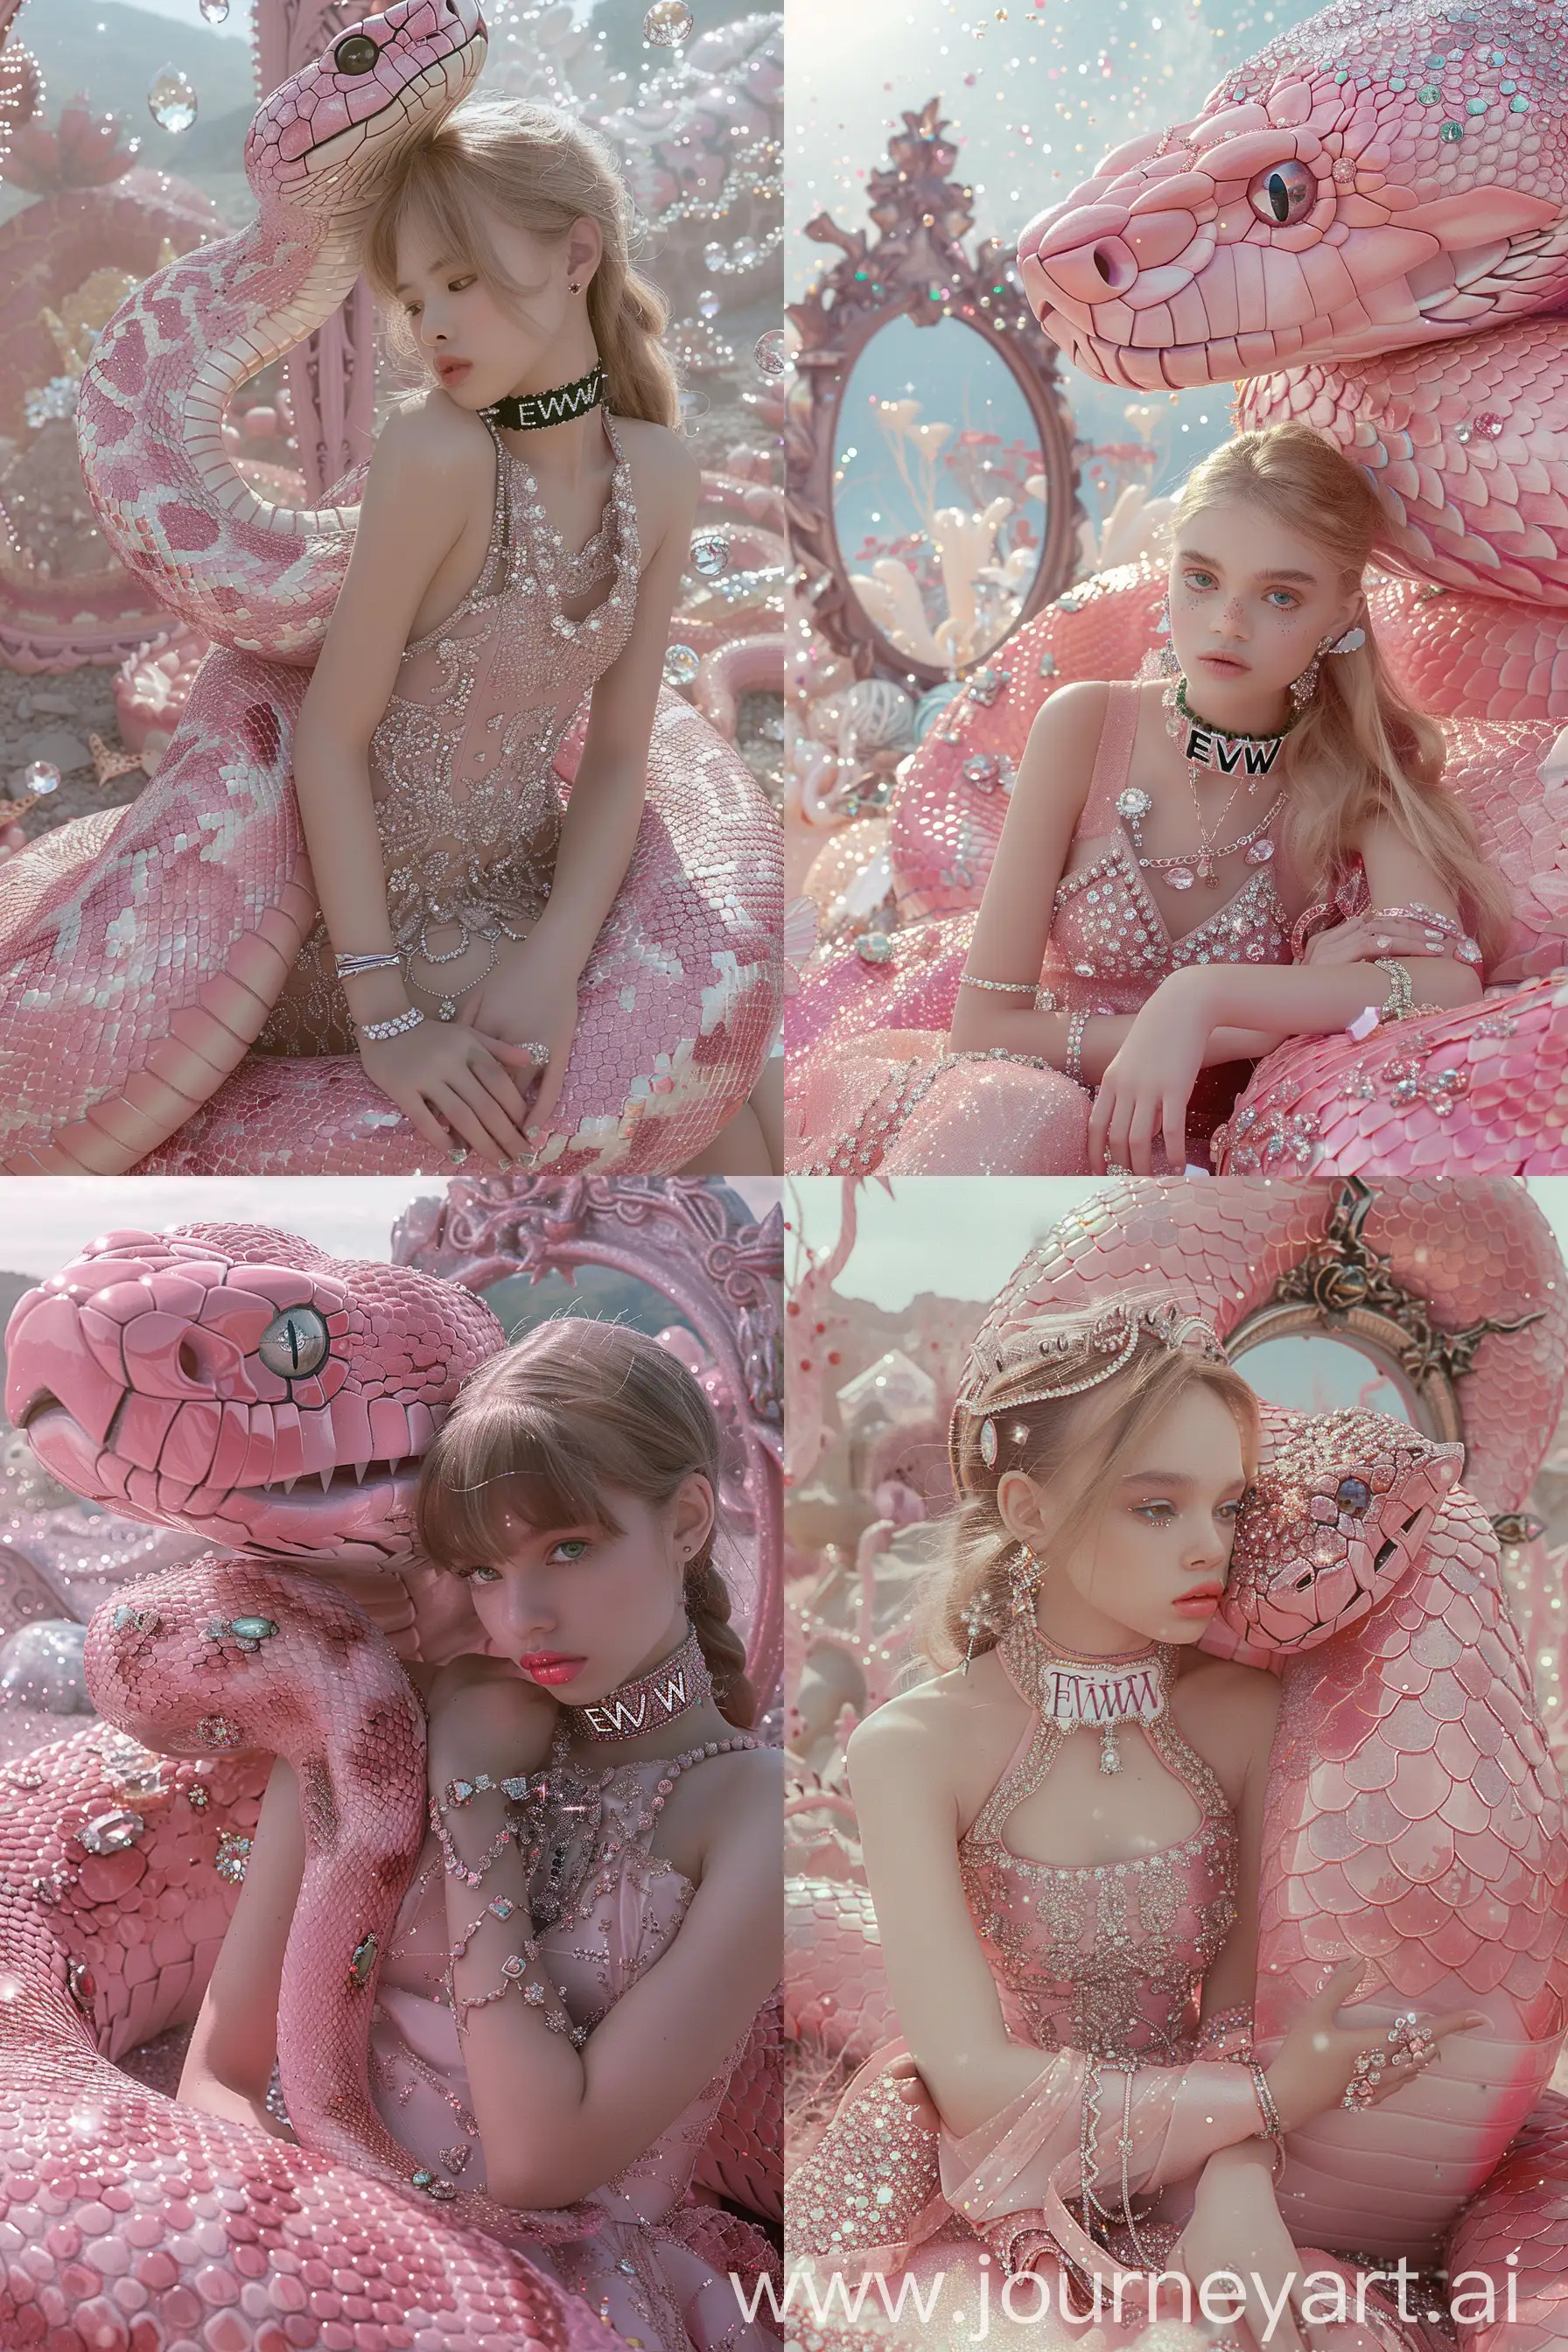 Fantasy-Girl-Embracing-Giant-Pink-Snake-in-Mirror-World